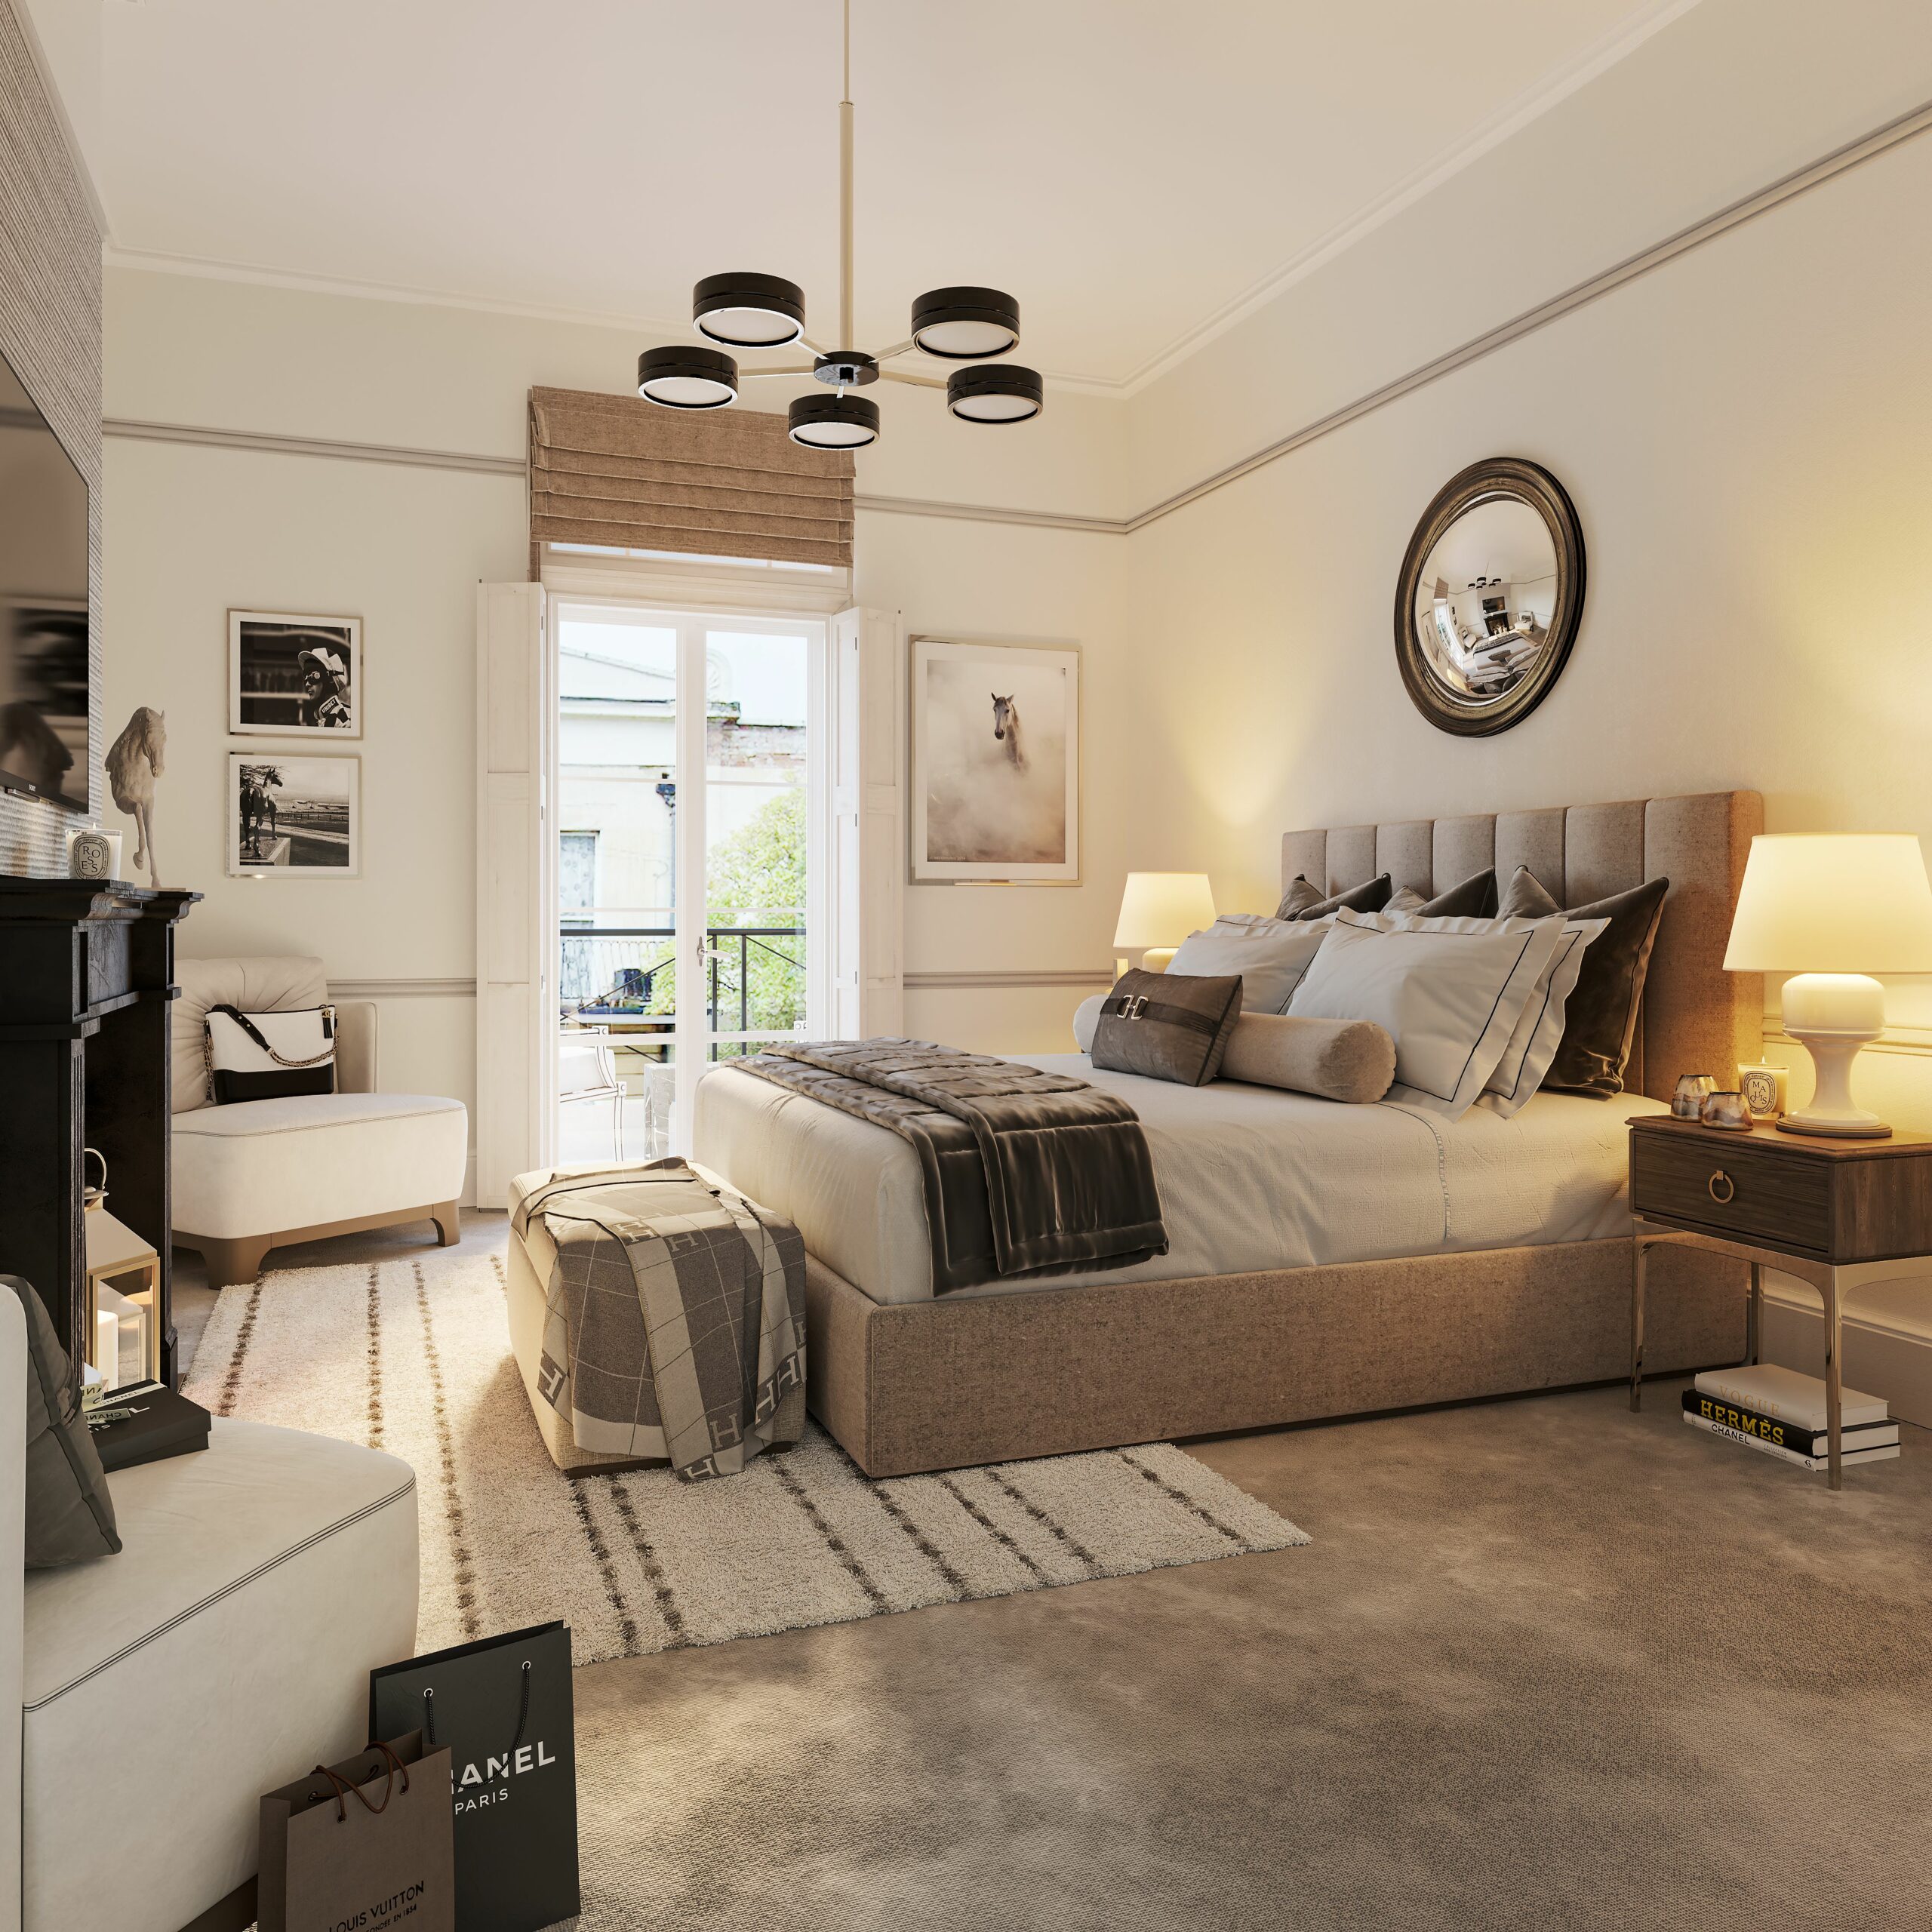 interior bedroom cgi 3d visualisation cheltenham lh1 global residential apartment